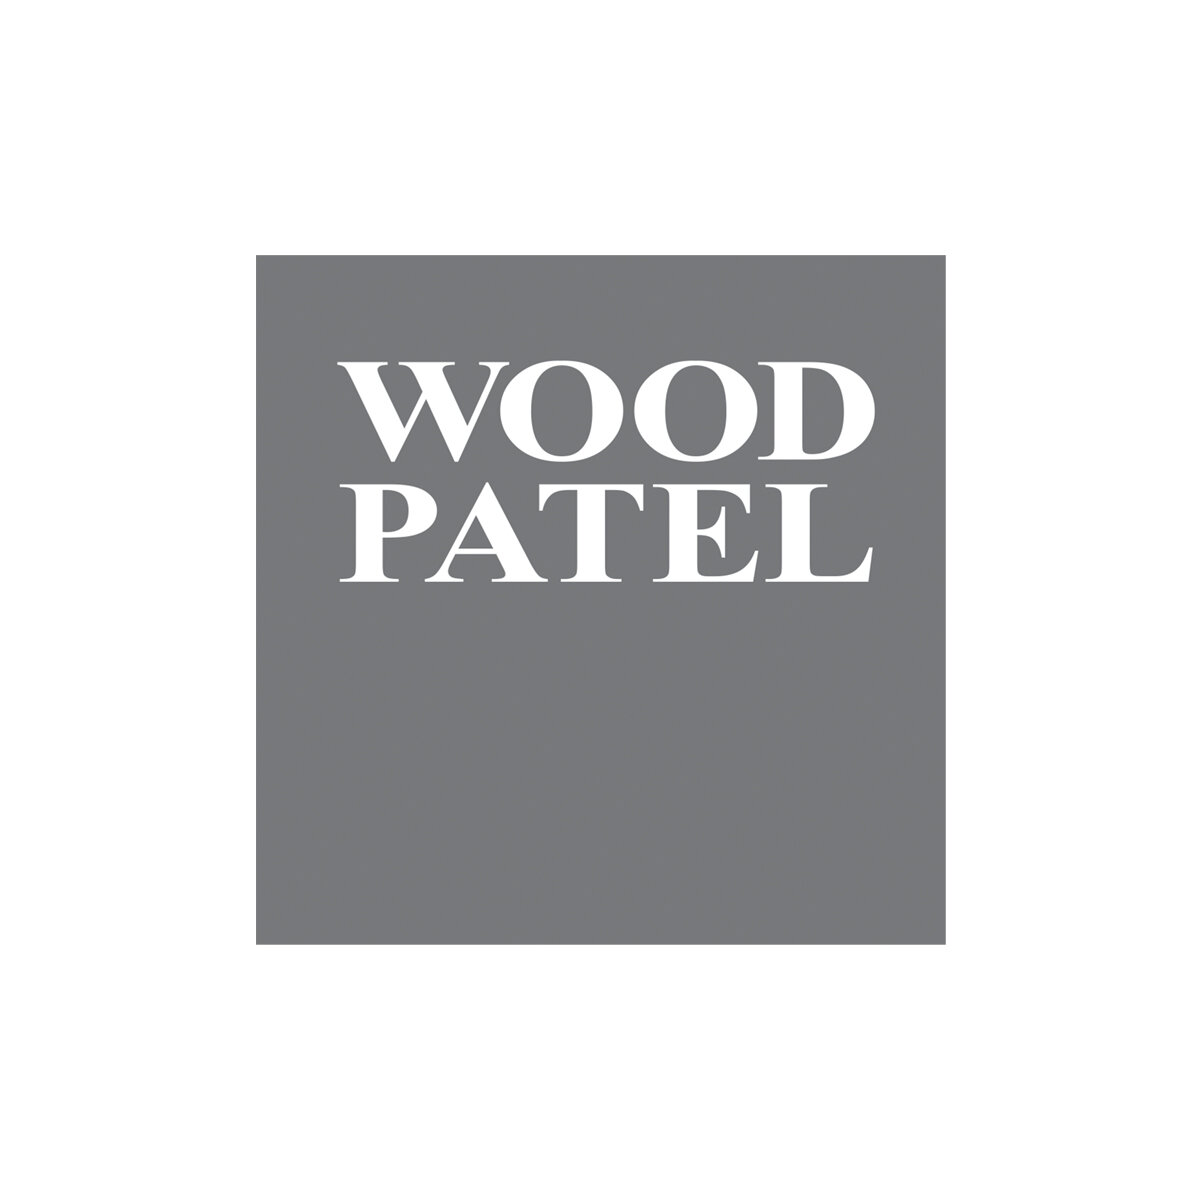 Wood Patel logo.jpg